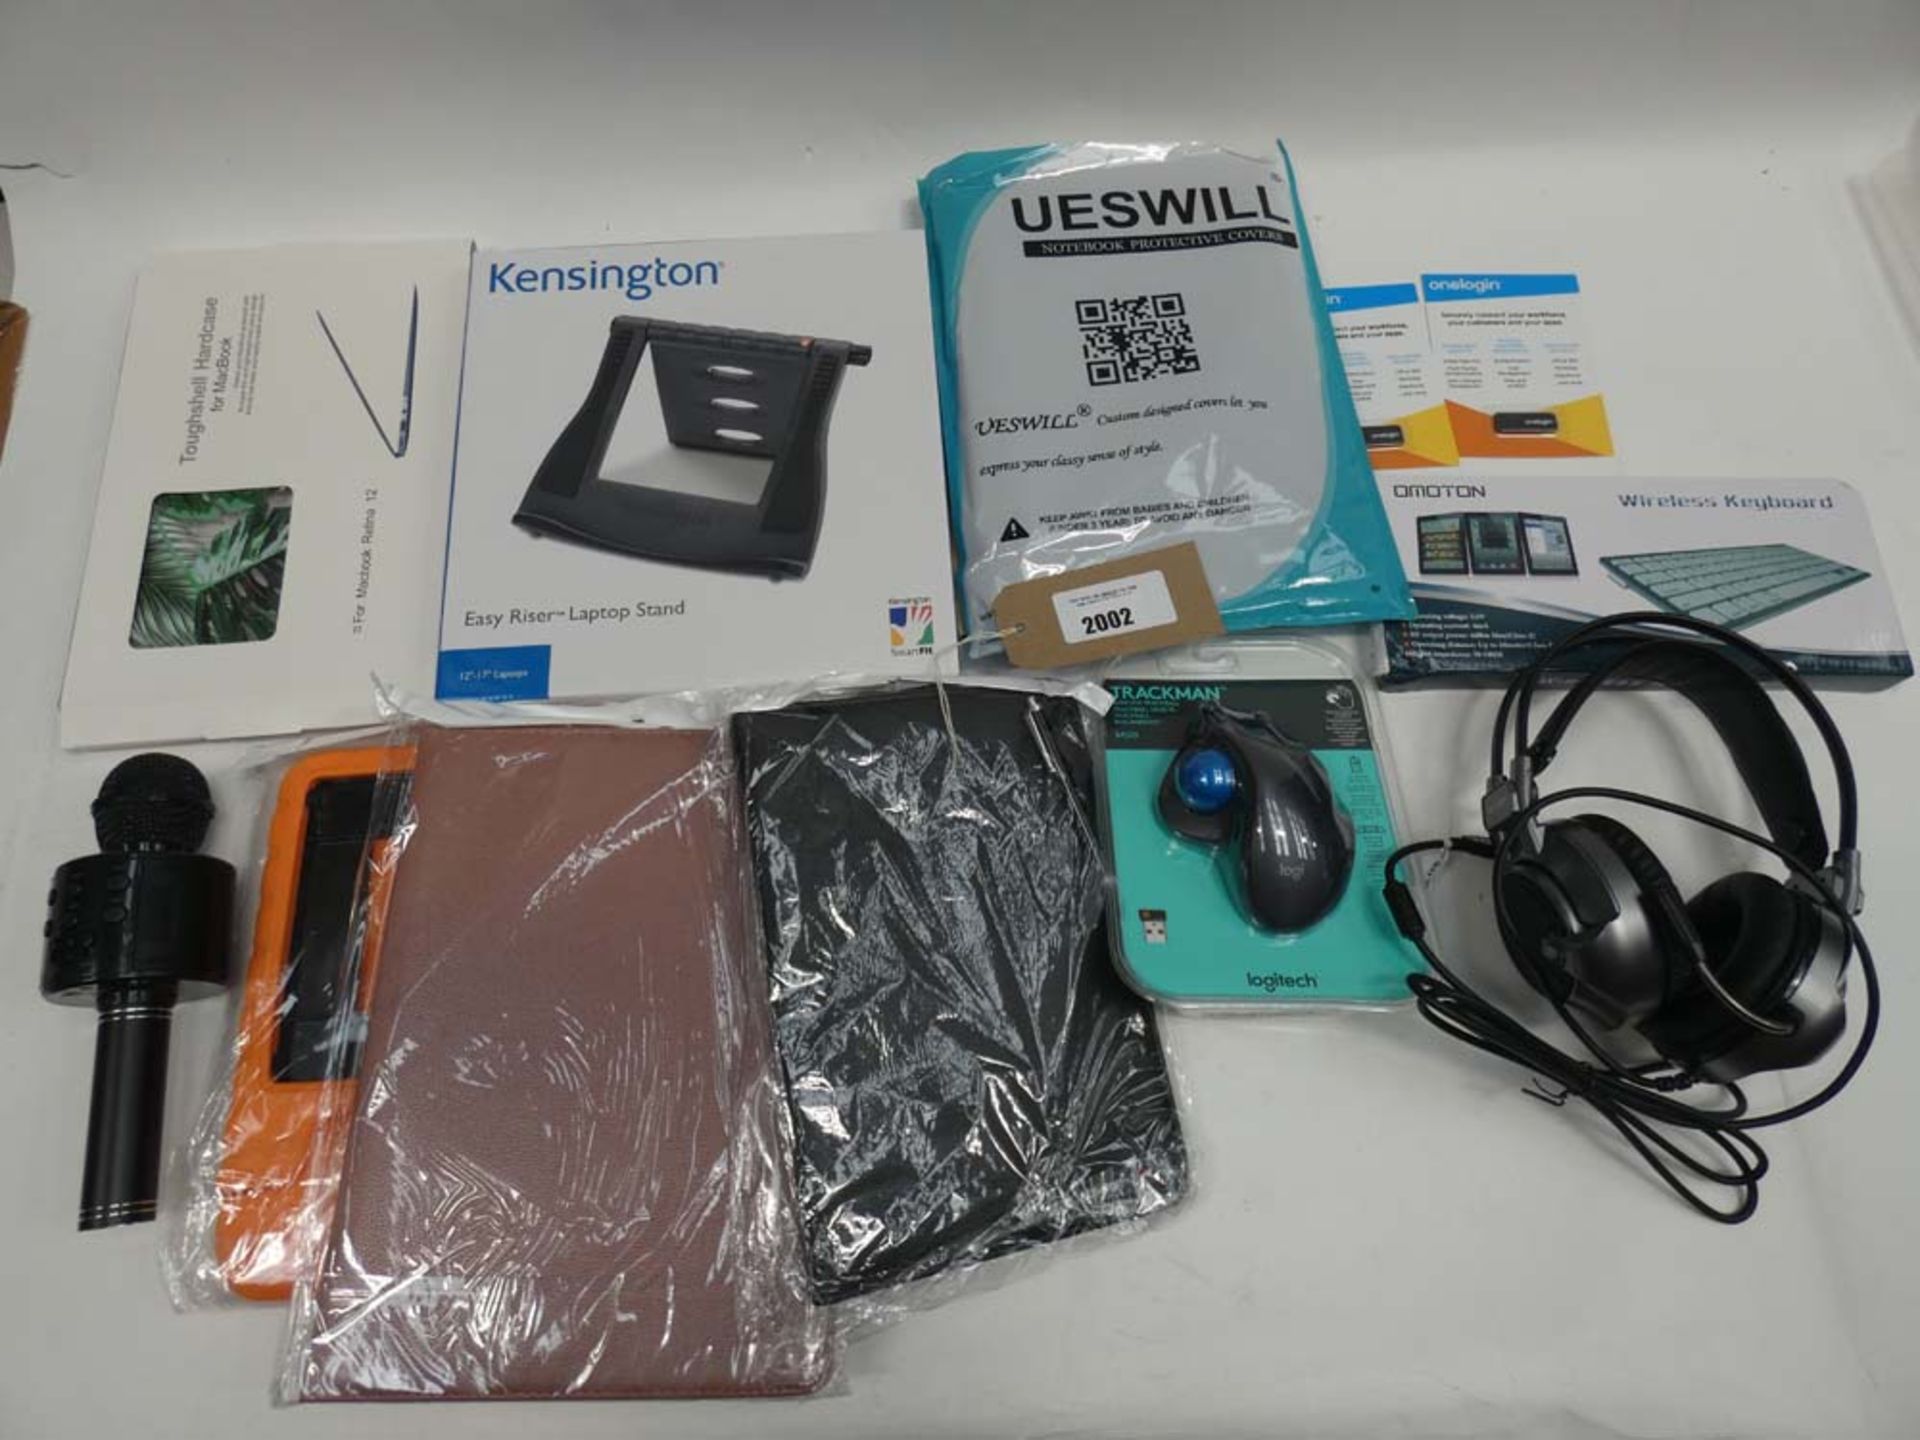 Bag containing tablet cases, microphone, Tecknet headset, Kensington laptop stand, Logitech Trackman